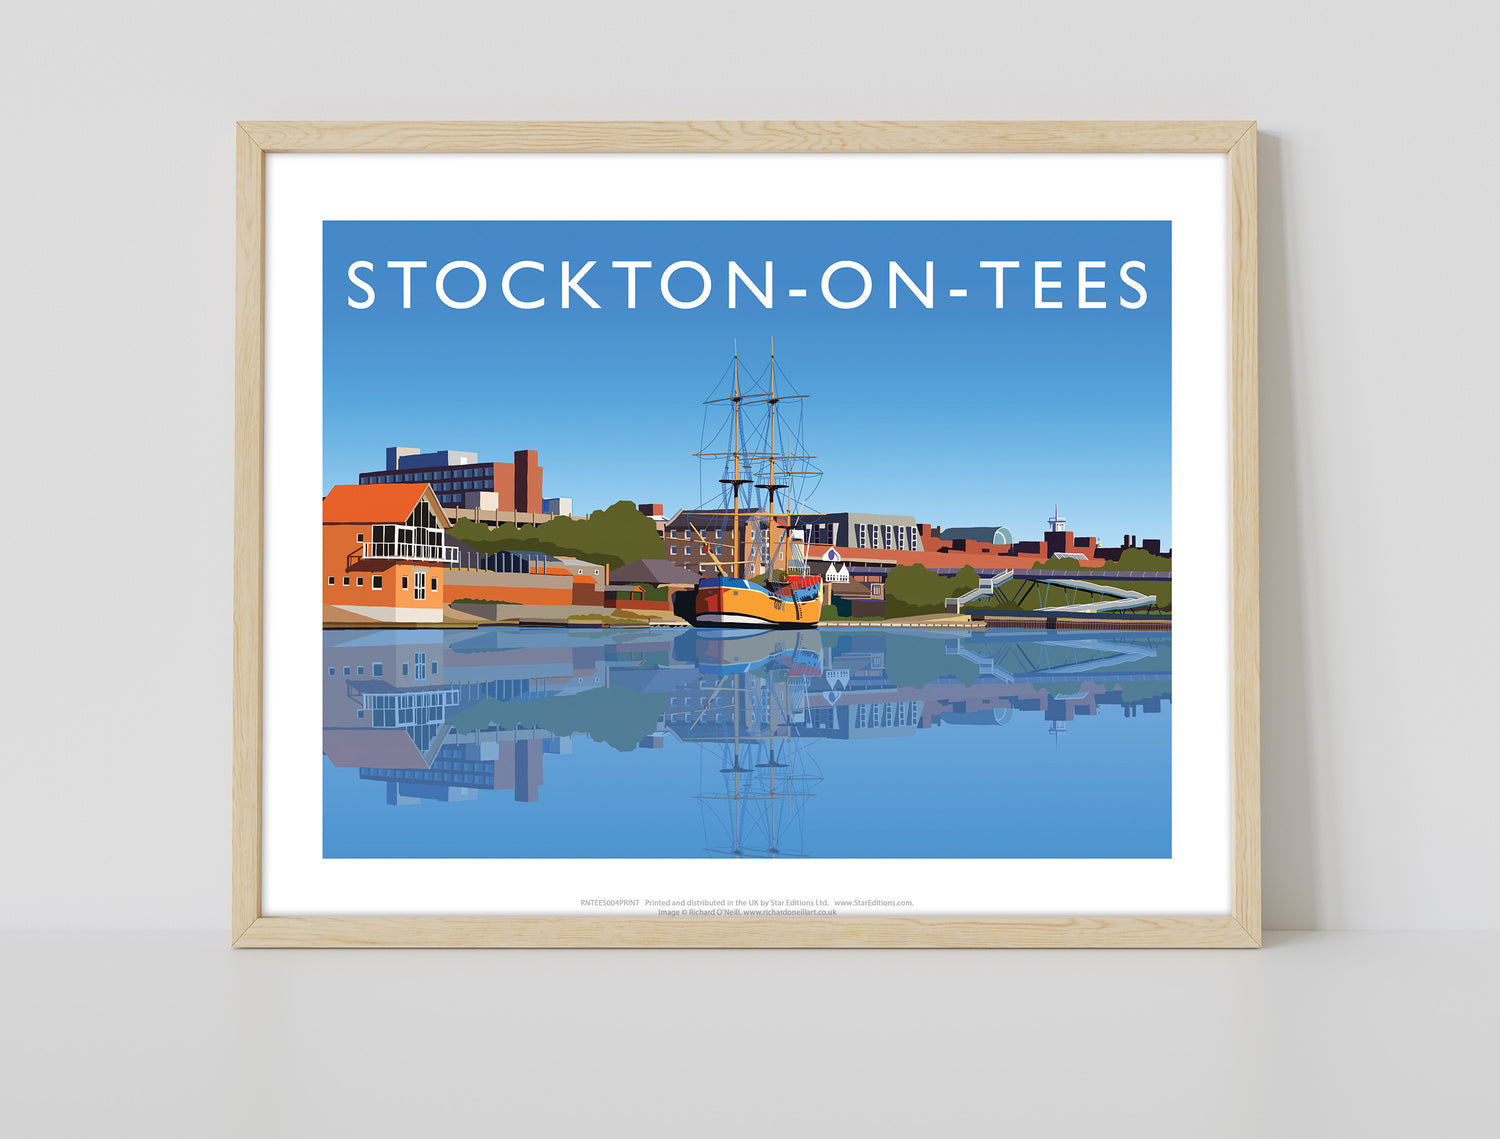 Stockton-on-Tees, County Durham - Art Print